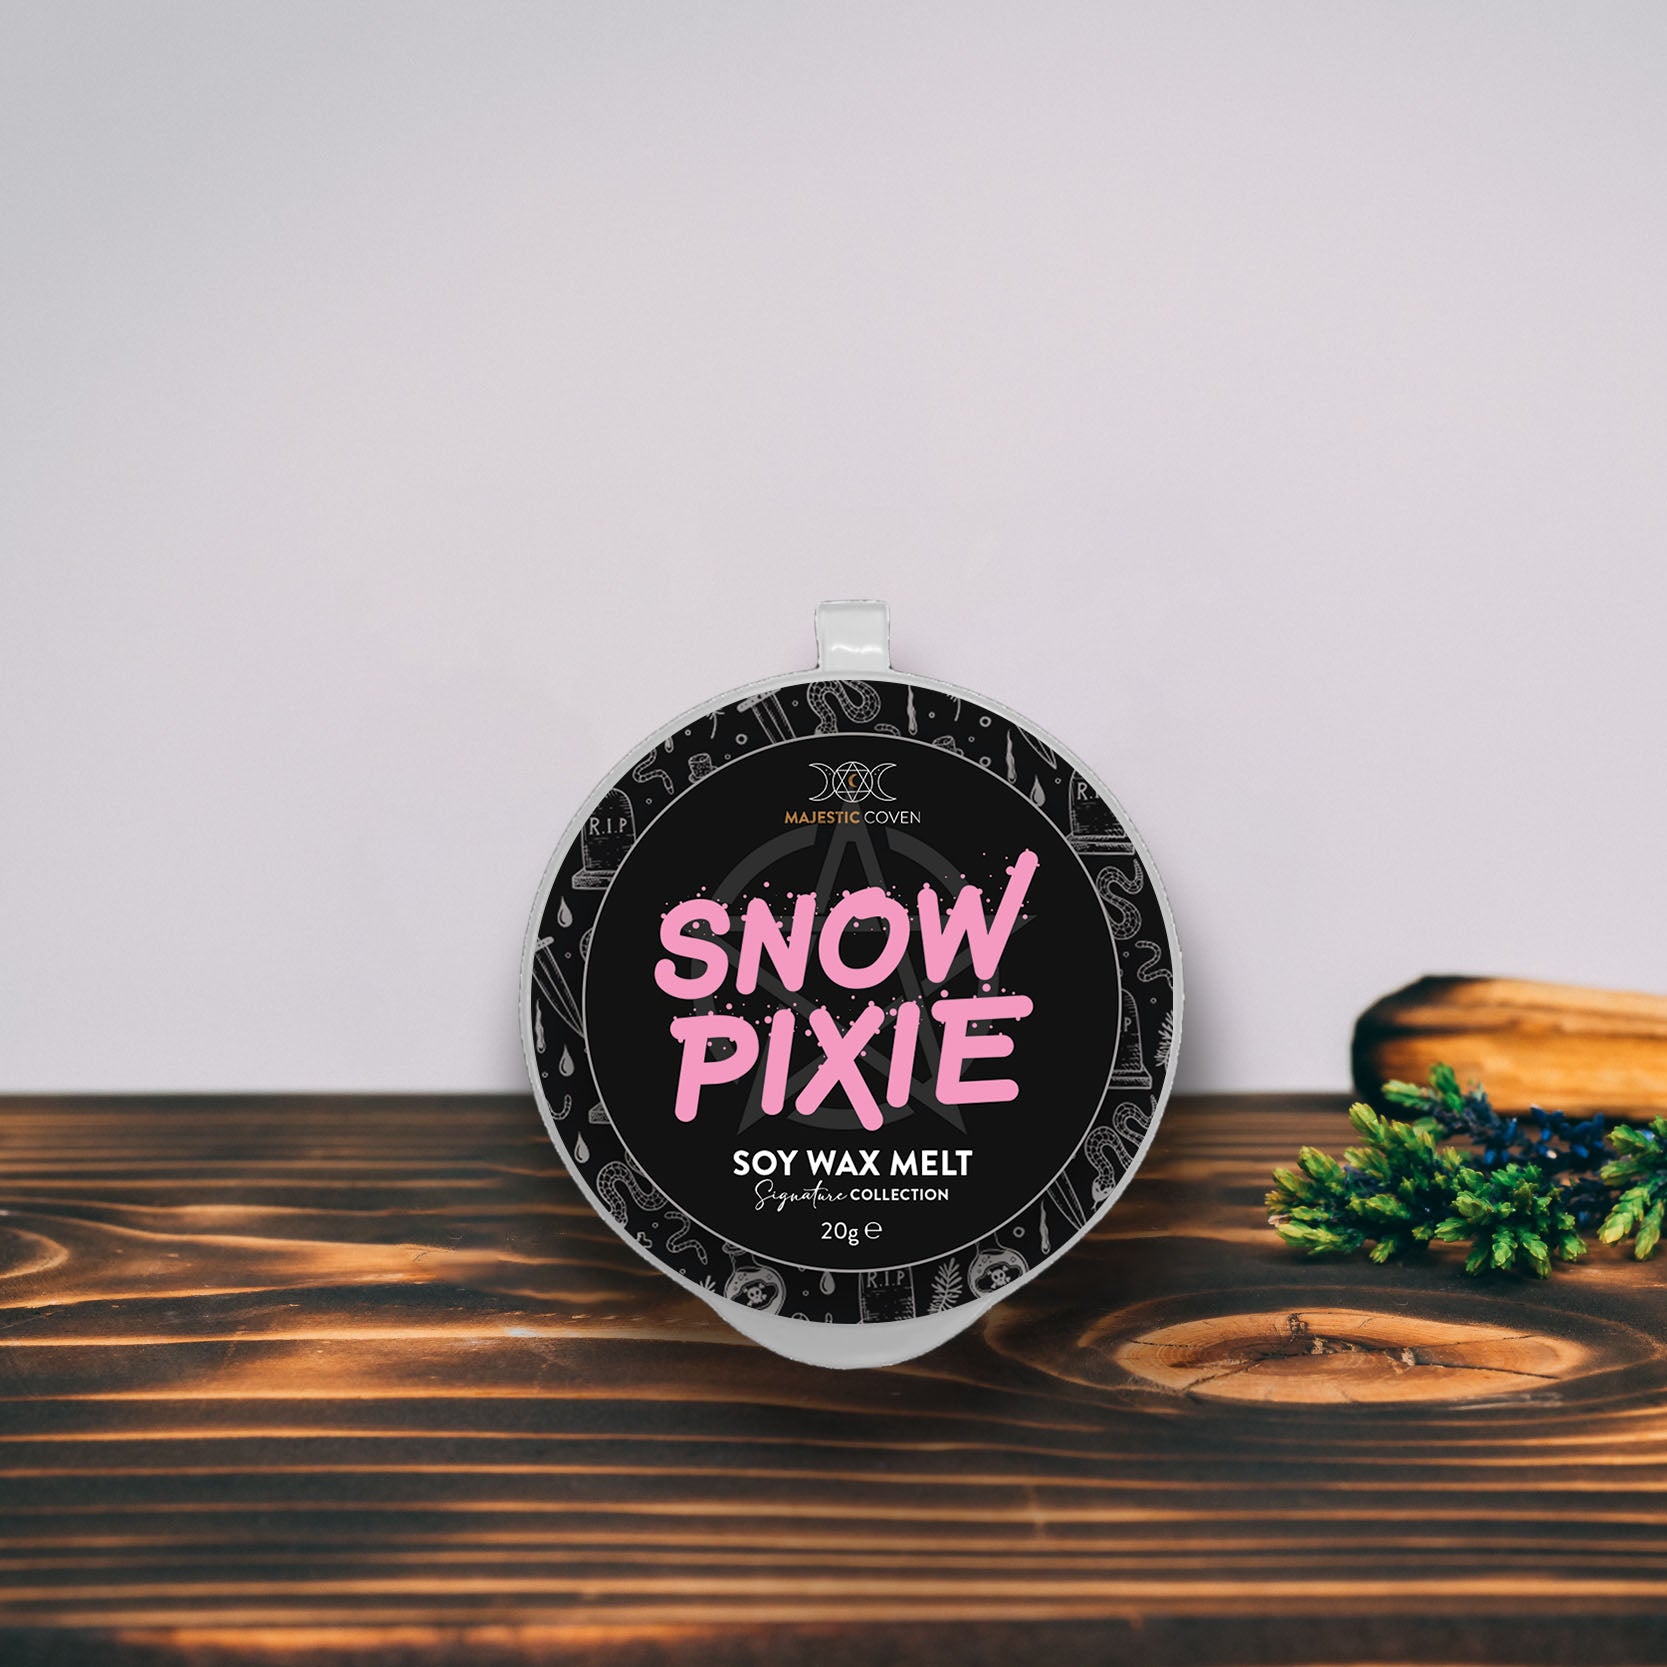 Snow Pixie - Soy Wax Melt 20g Sample Pot Majestic Coven